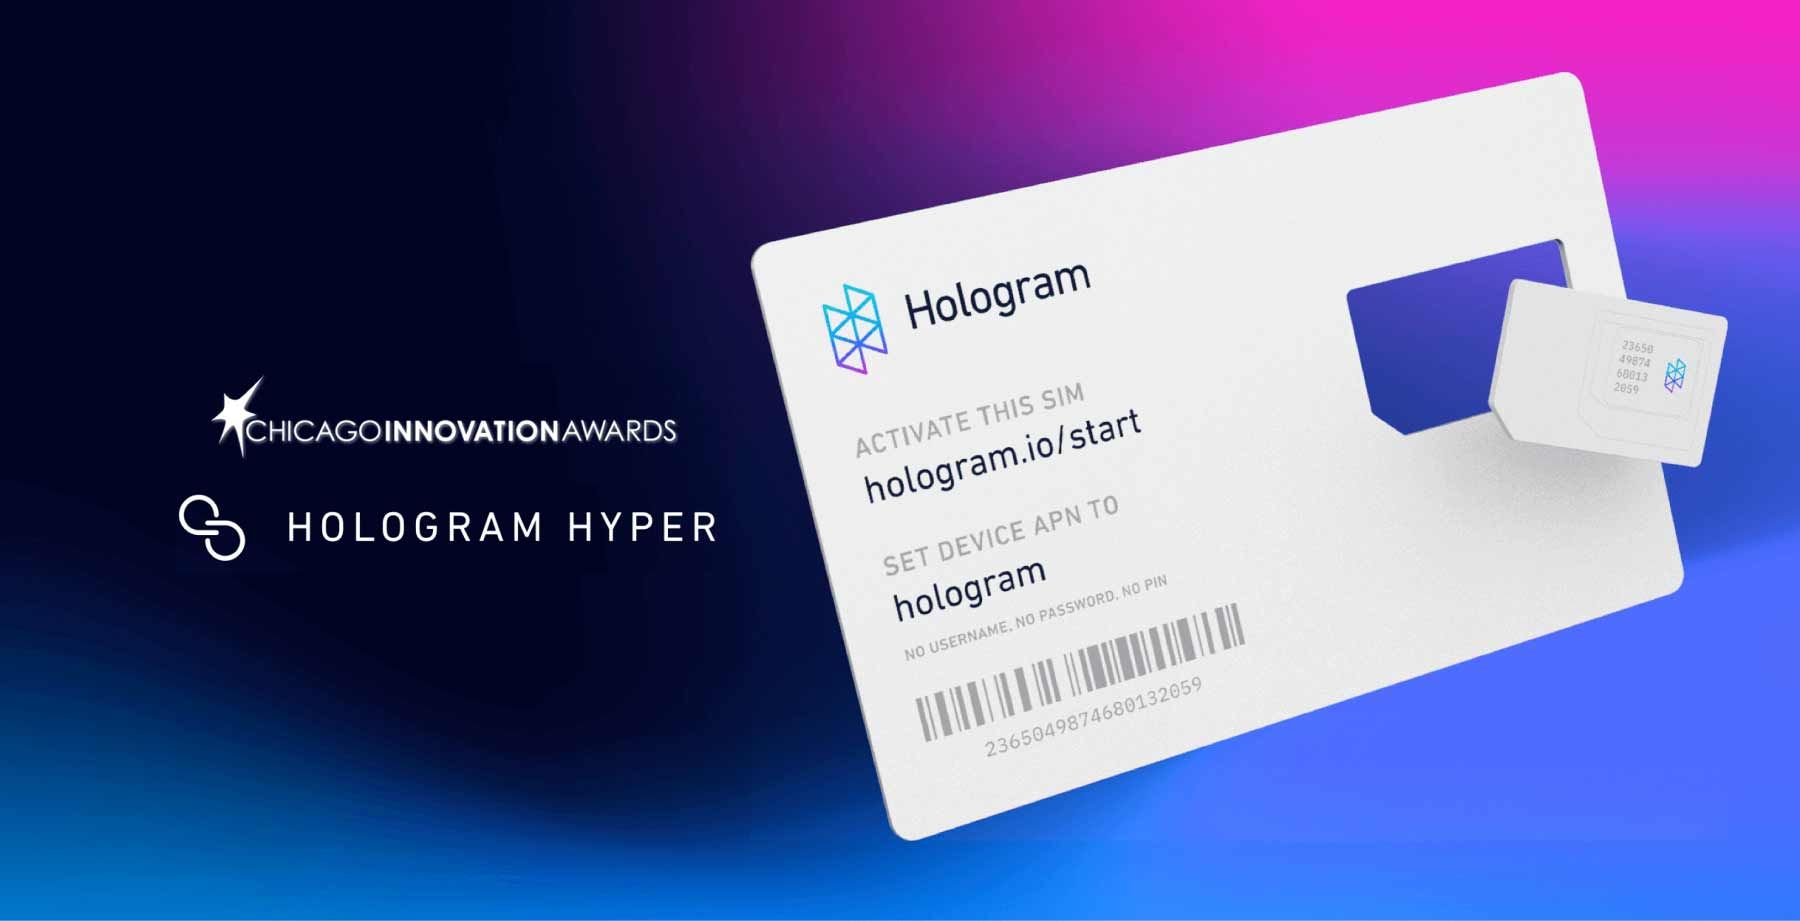 Hologram Hyper has won a Chicago Innovation Award.